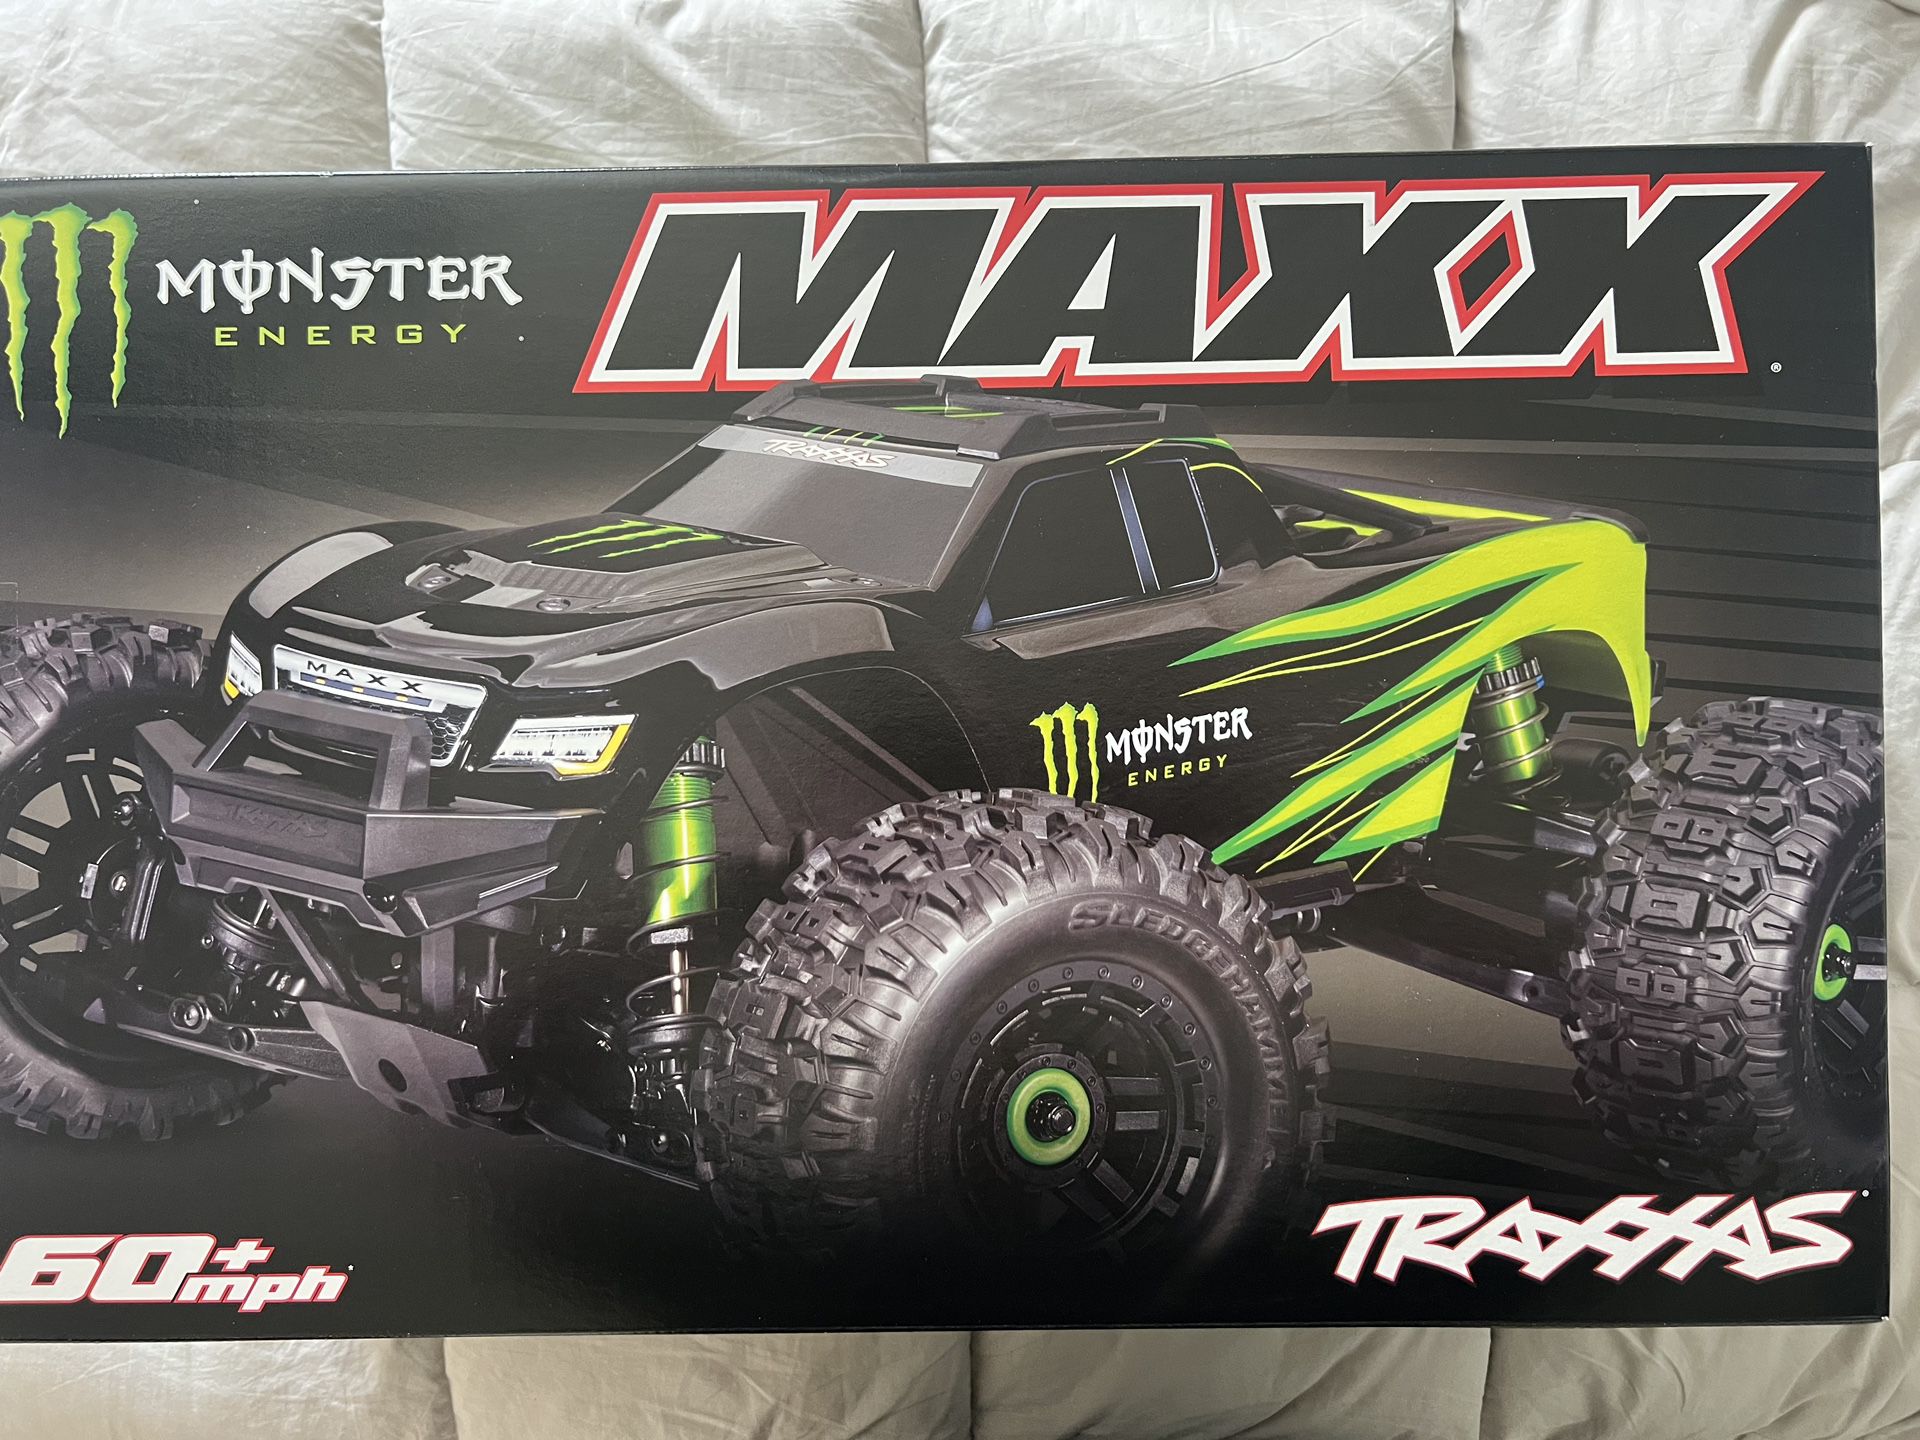 Monster Energy Maxx Traxxas Truck -  Below Counter Chiller - Counter Top Nos Energy Fridge & Cornhole